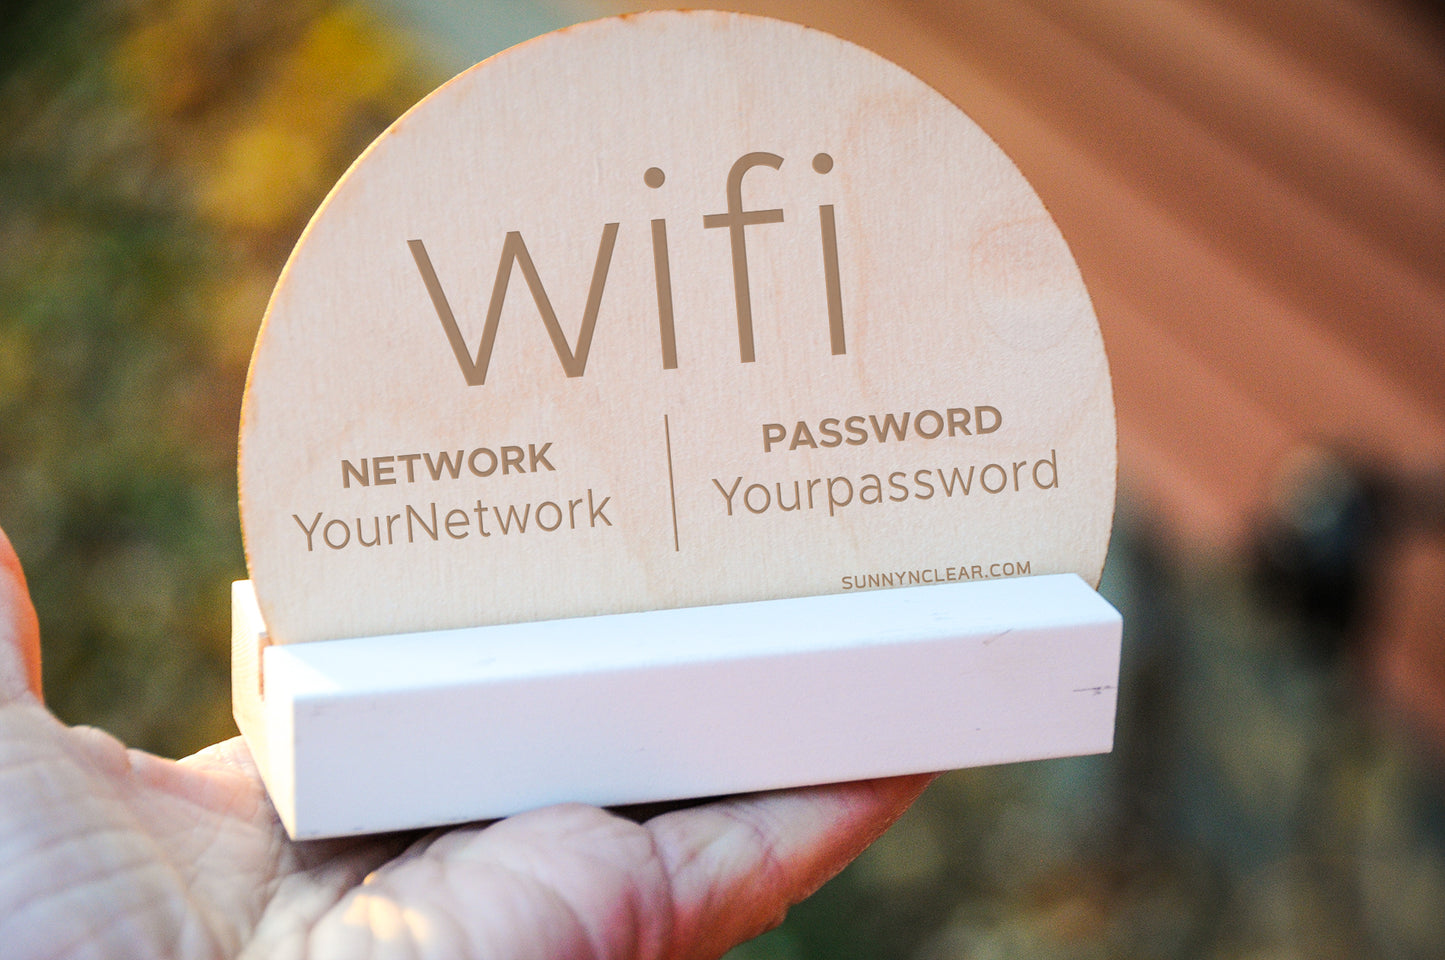 Modern WiFi Password Sign, Wood, Minimal